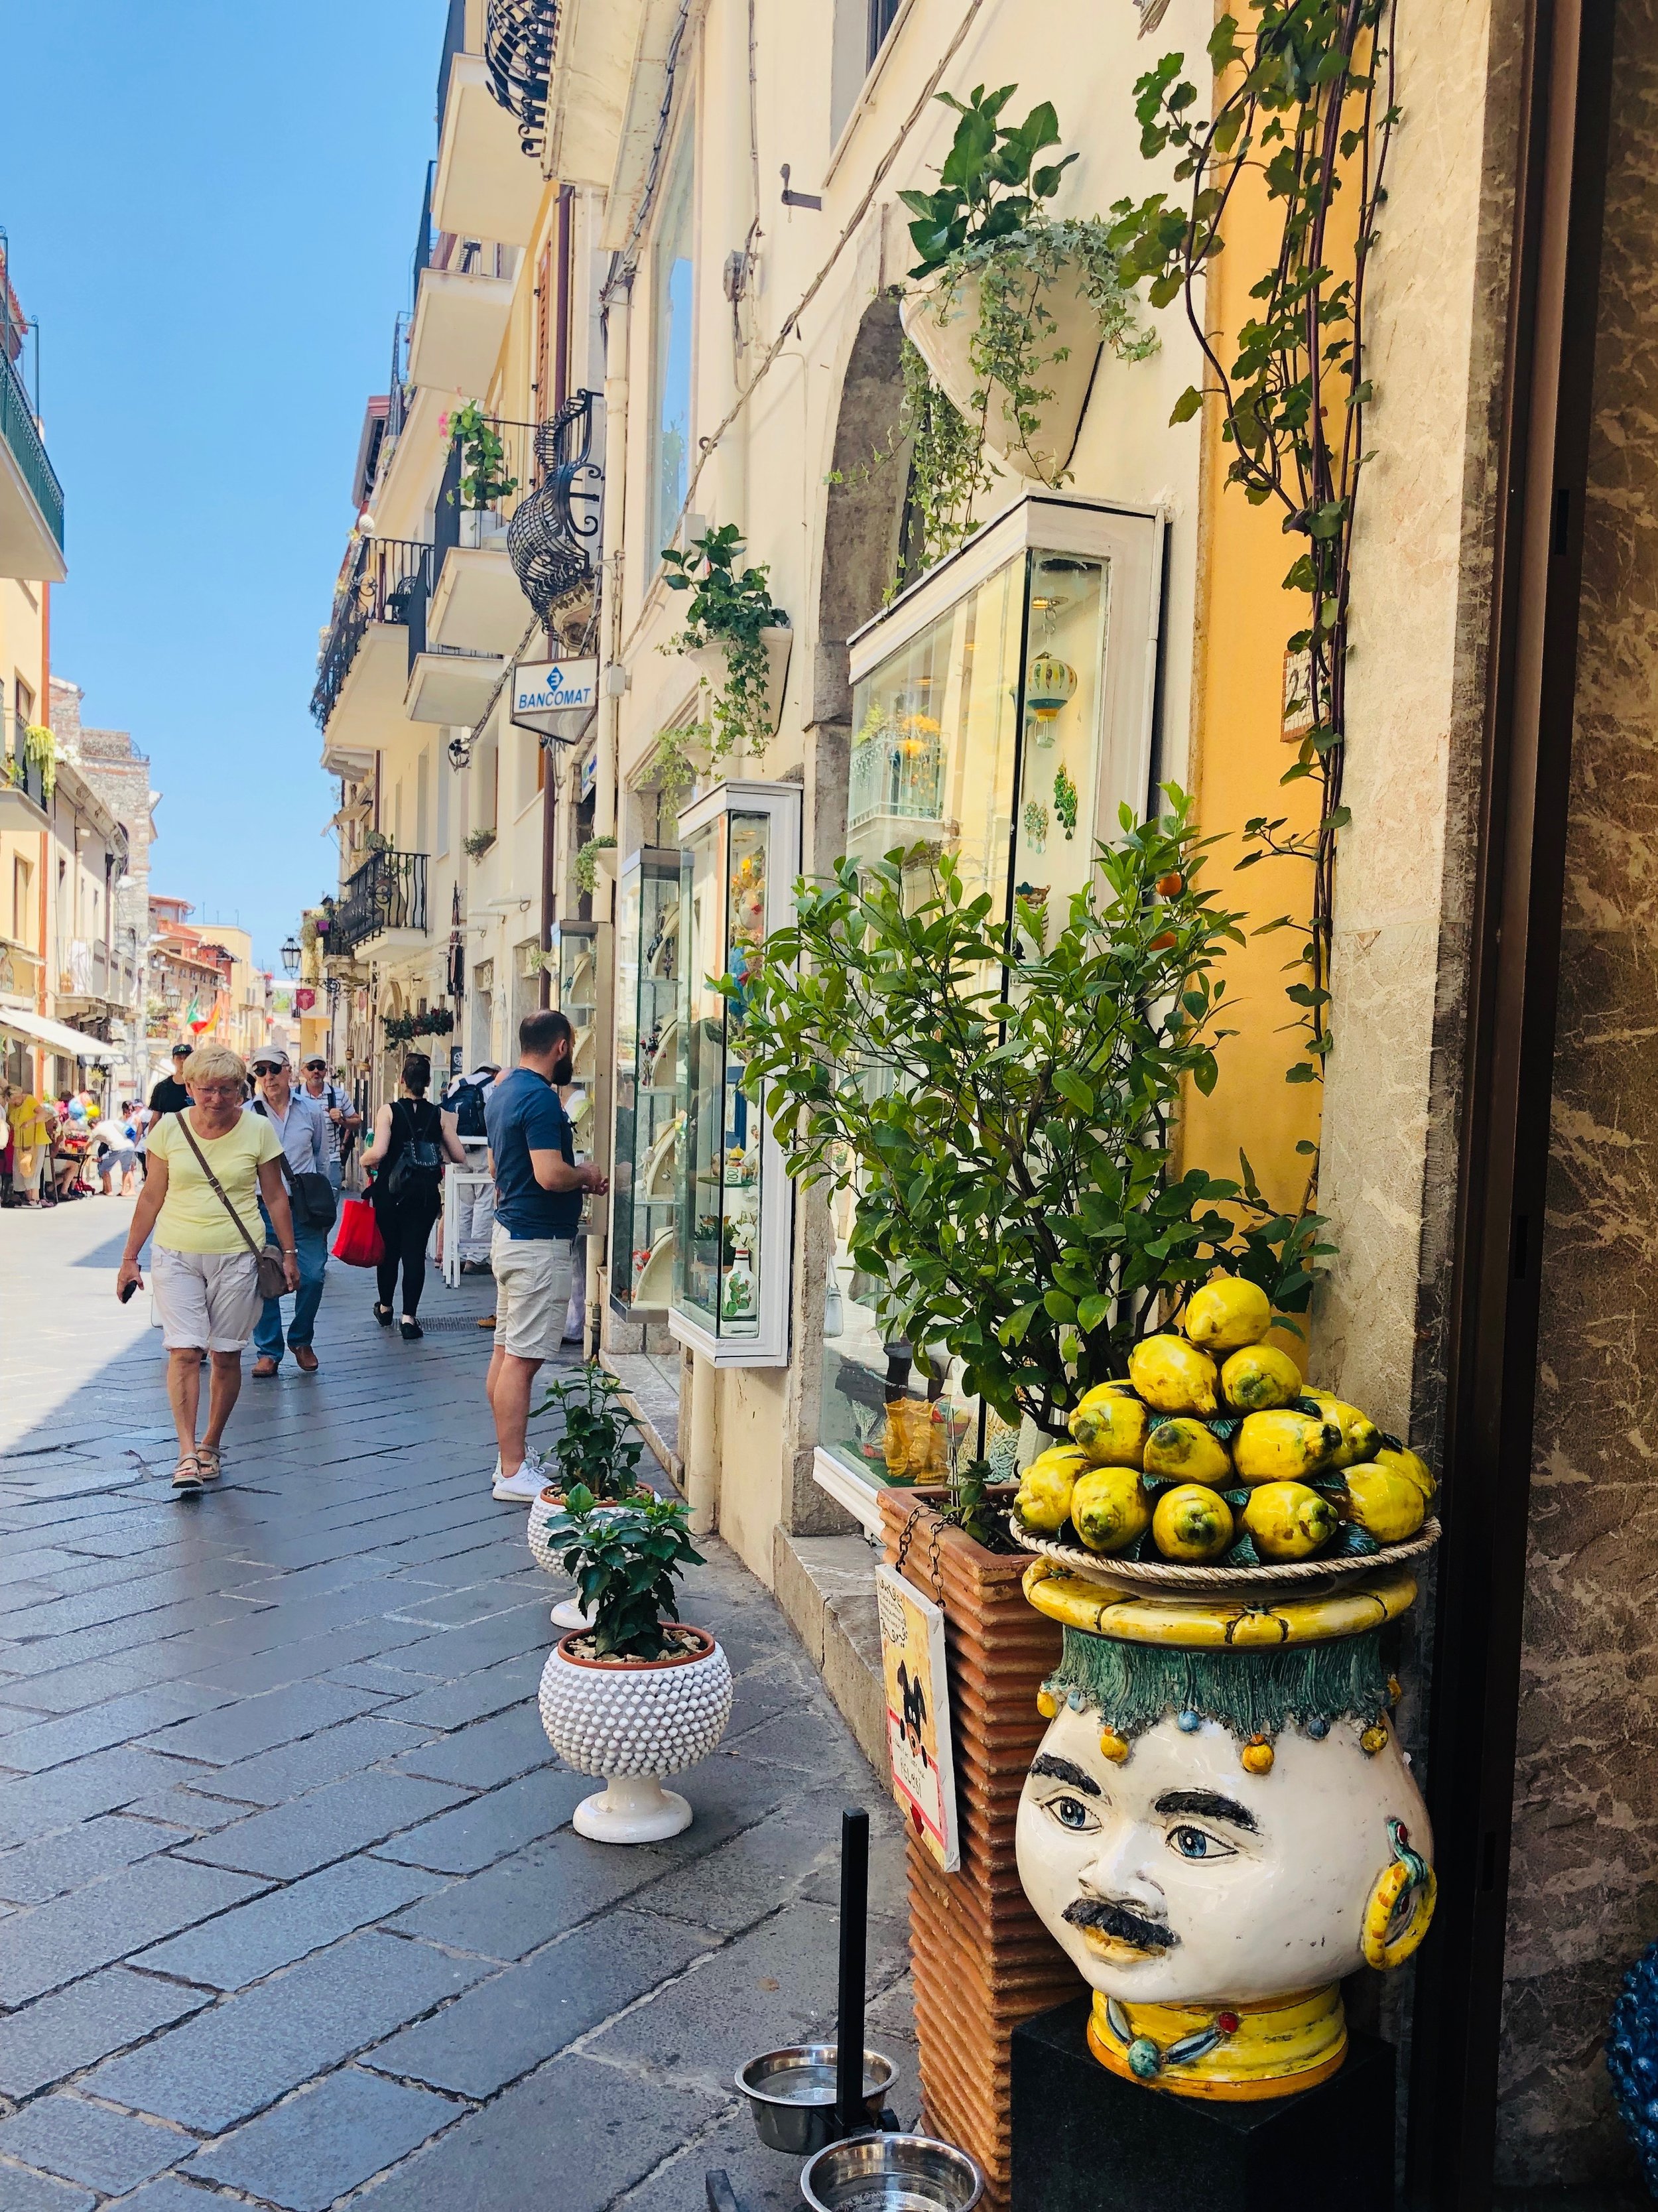 The beautiful town of Taormina.